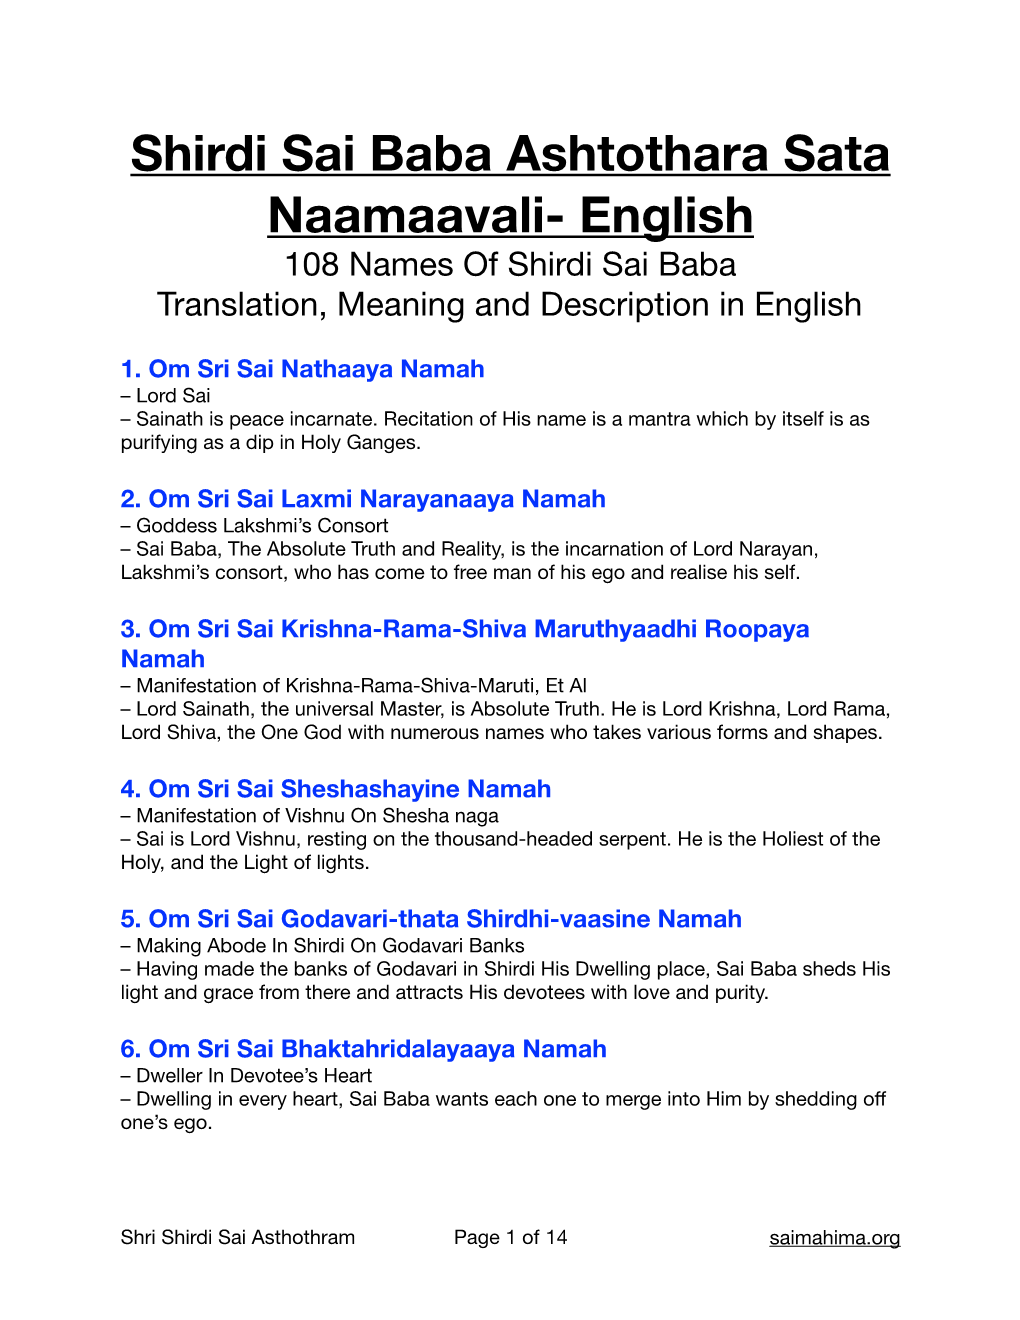 Shirdi Sai Baba Ashtothara Sata Naamaavali- English 108 Names of Shirdi Sai Baba Translation, Meaning and Description in English